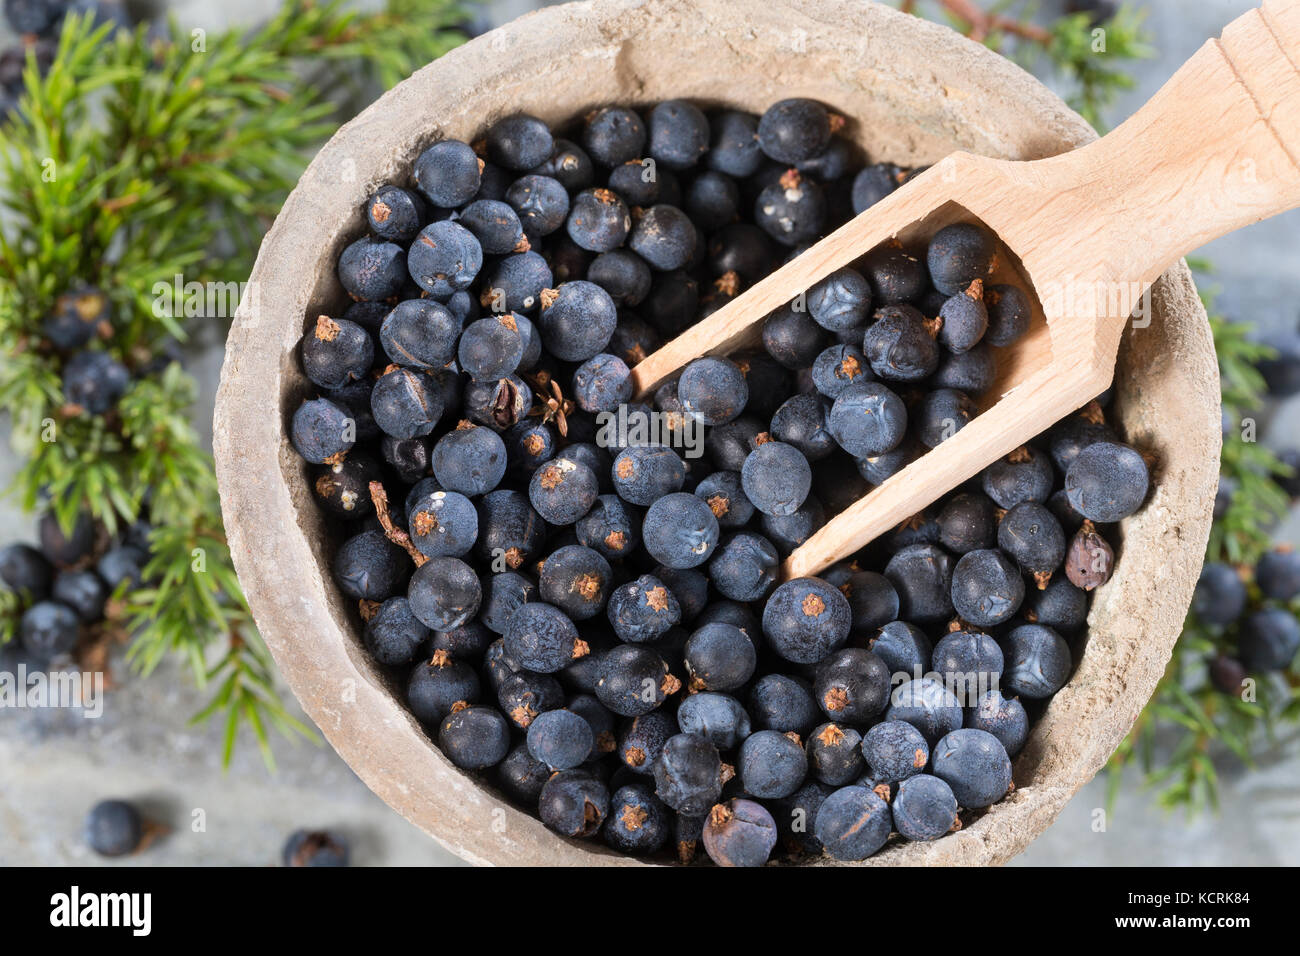 Juniperus communis beeren hi-res stock photography and images - Alamy